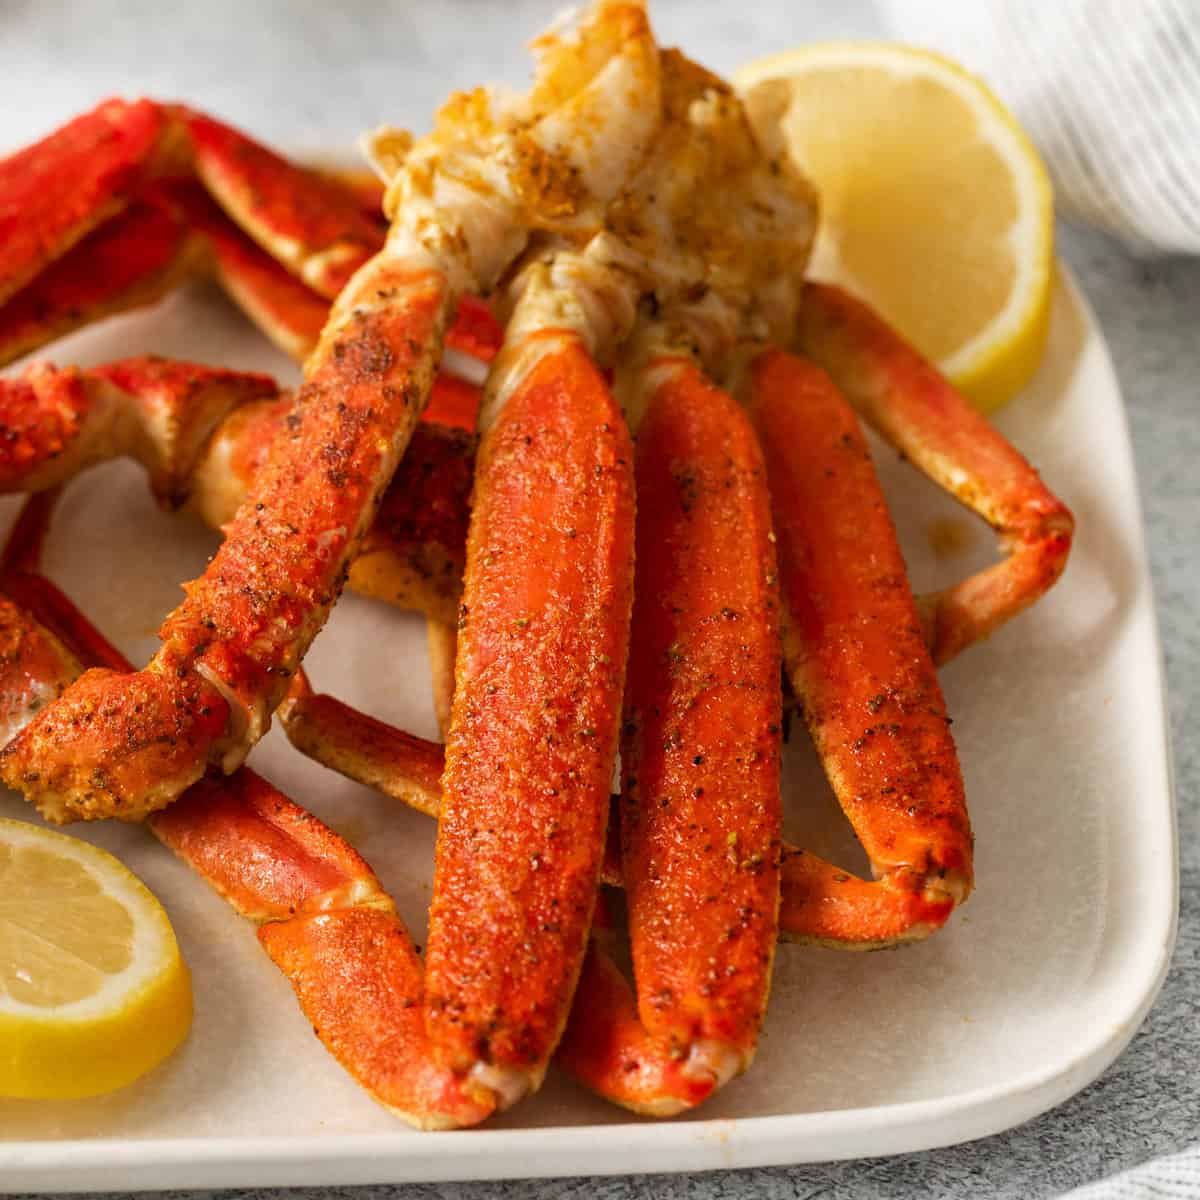 https://houseofnasheats.com/wp-content/uploads/2022/12/How-to-Cook-Snow-Crab-Legs-Square-1.jpg